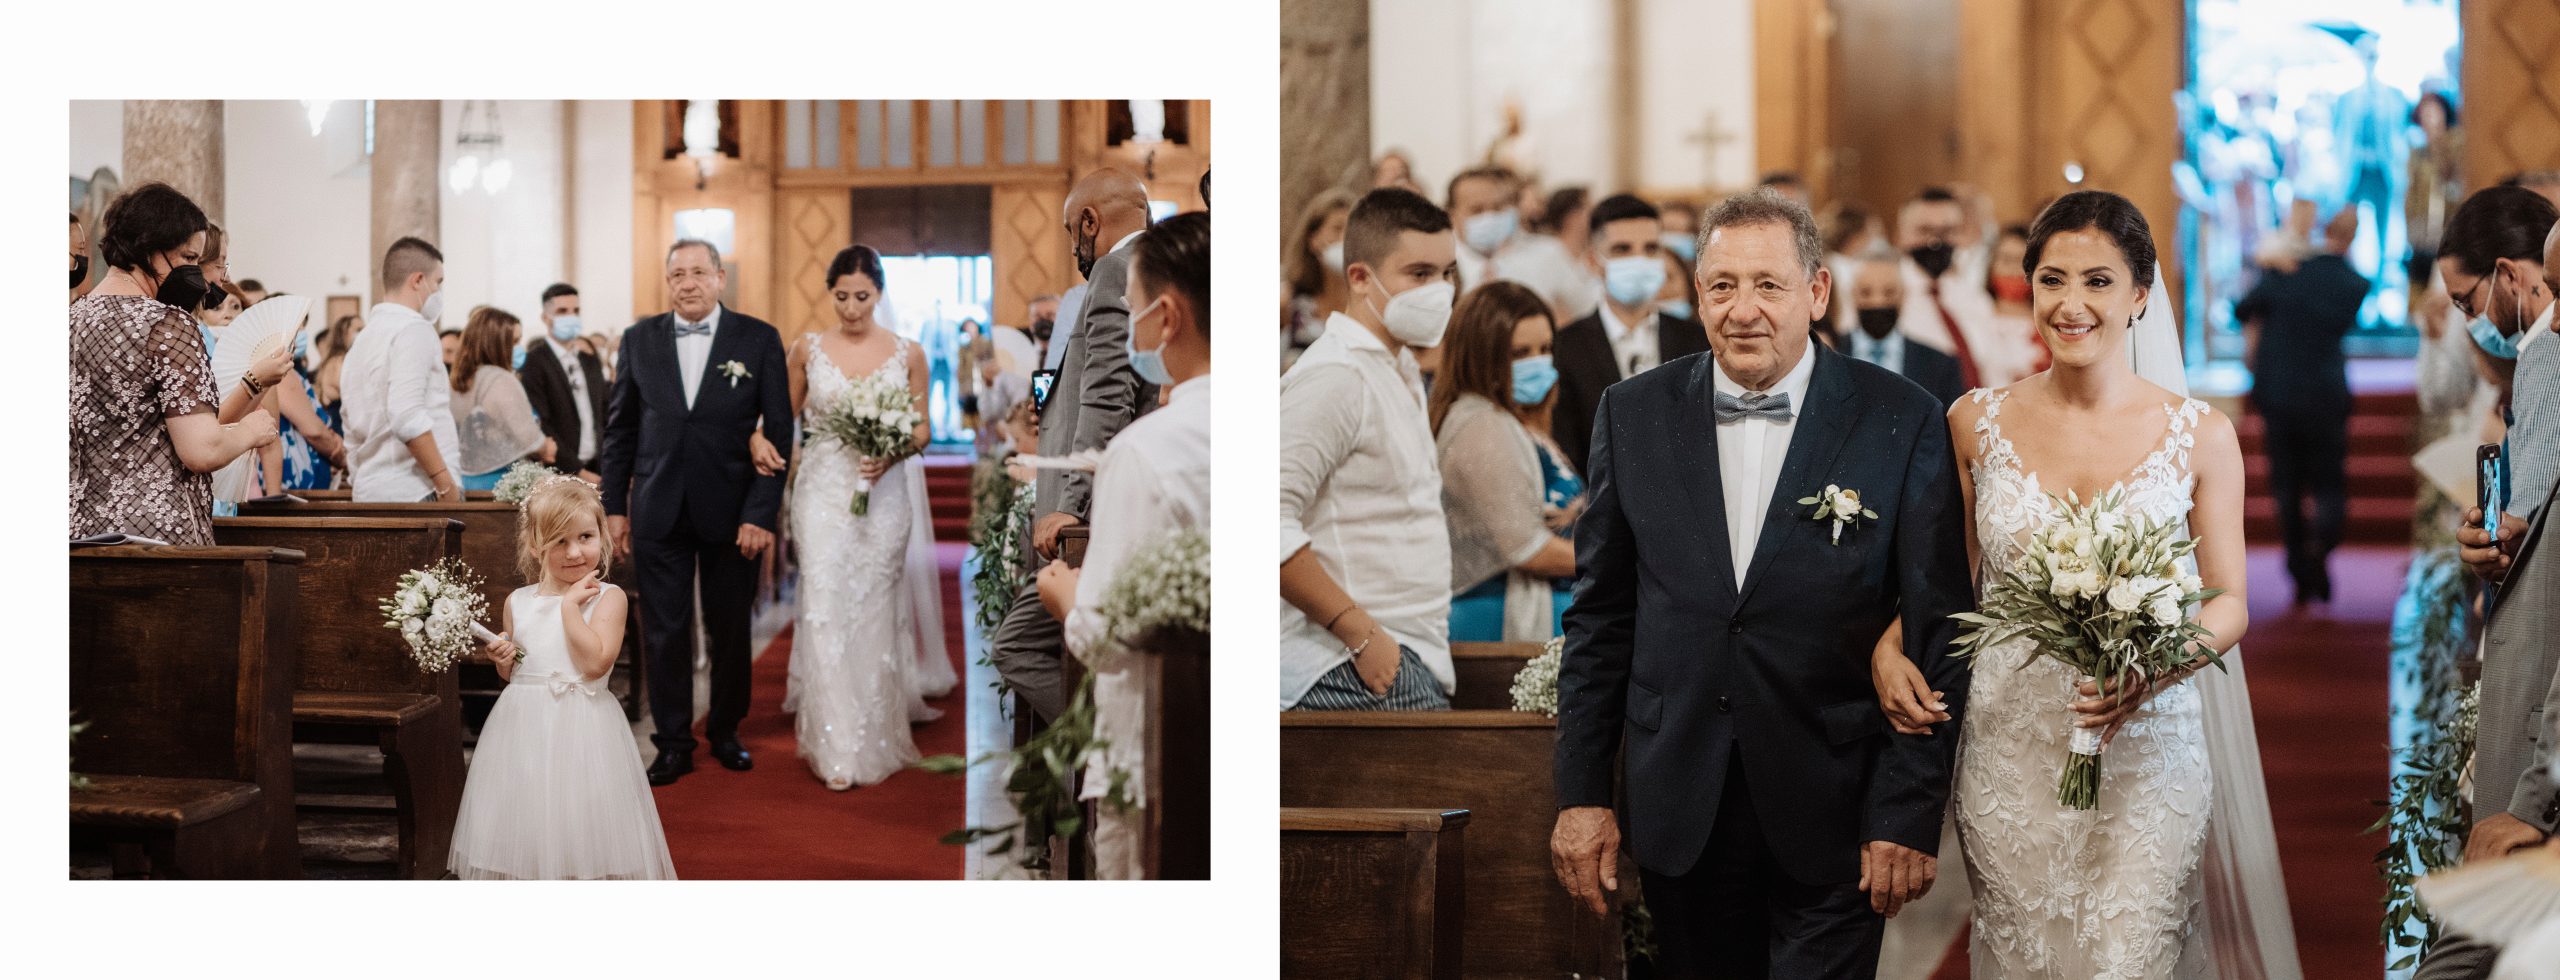 Jan e Melania 25 scaled - fotografo matrimonio catania